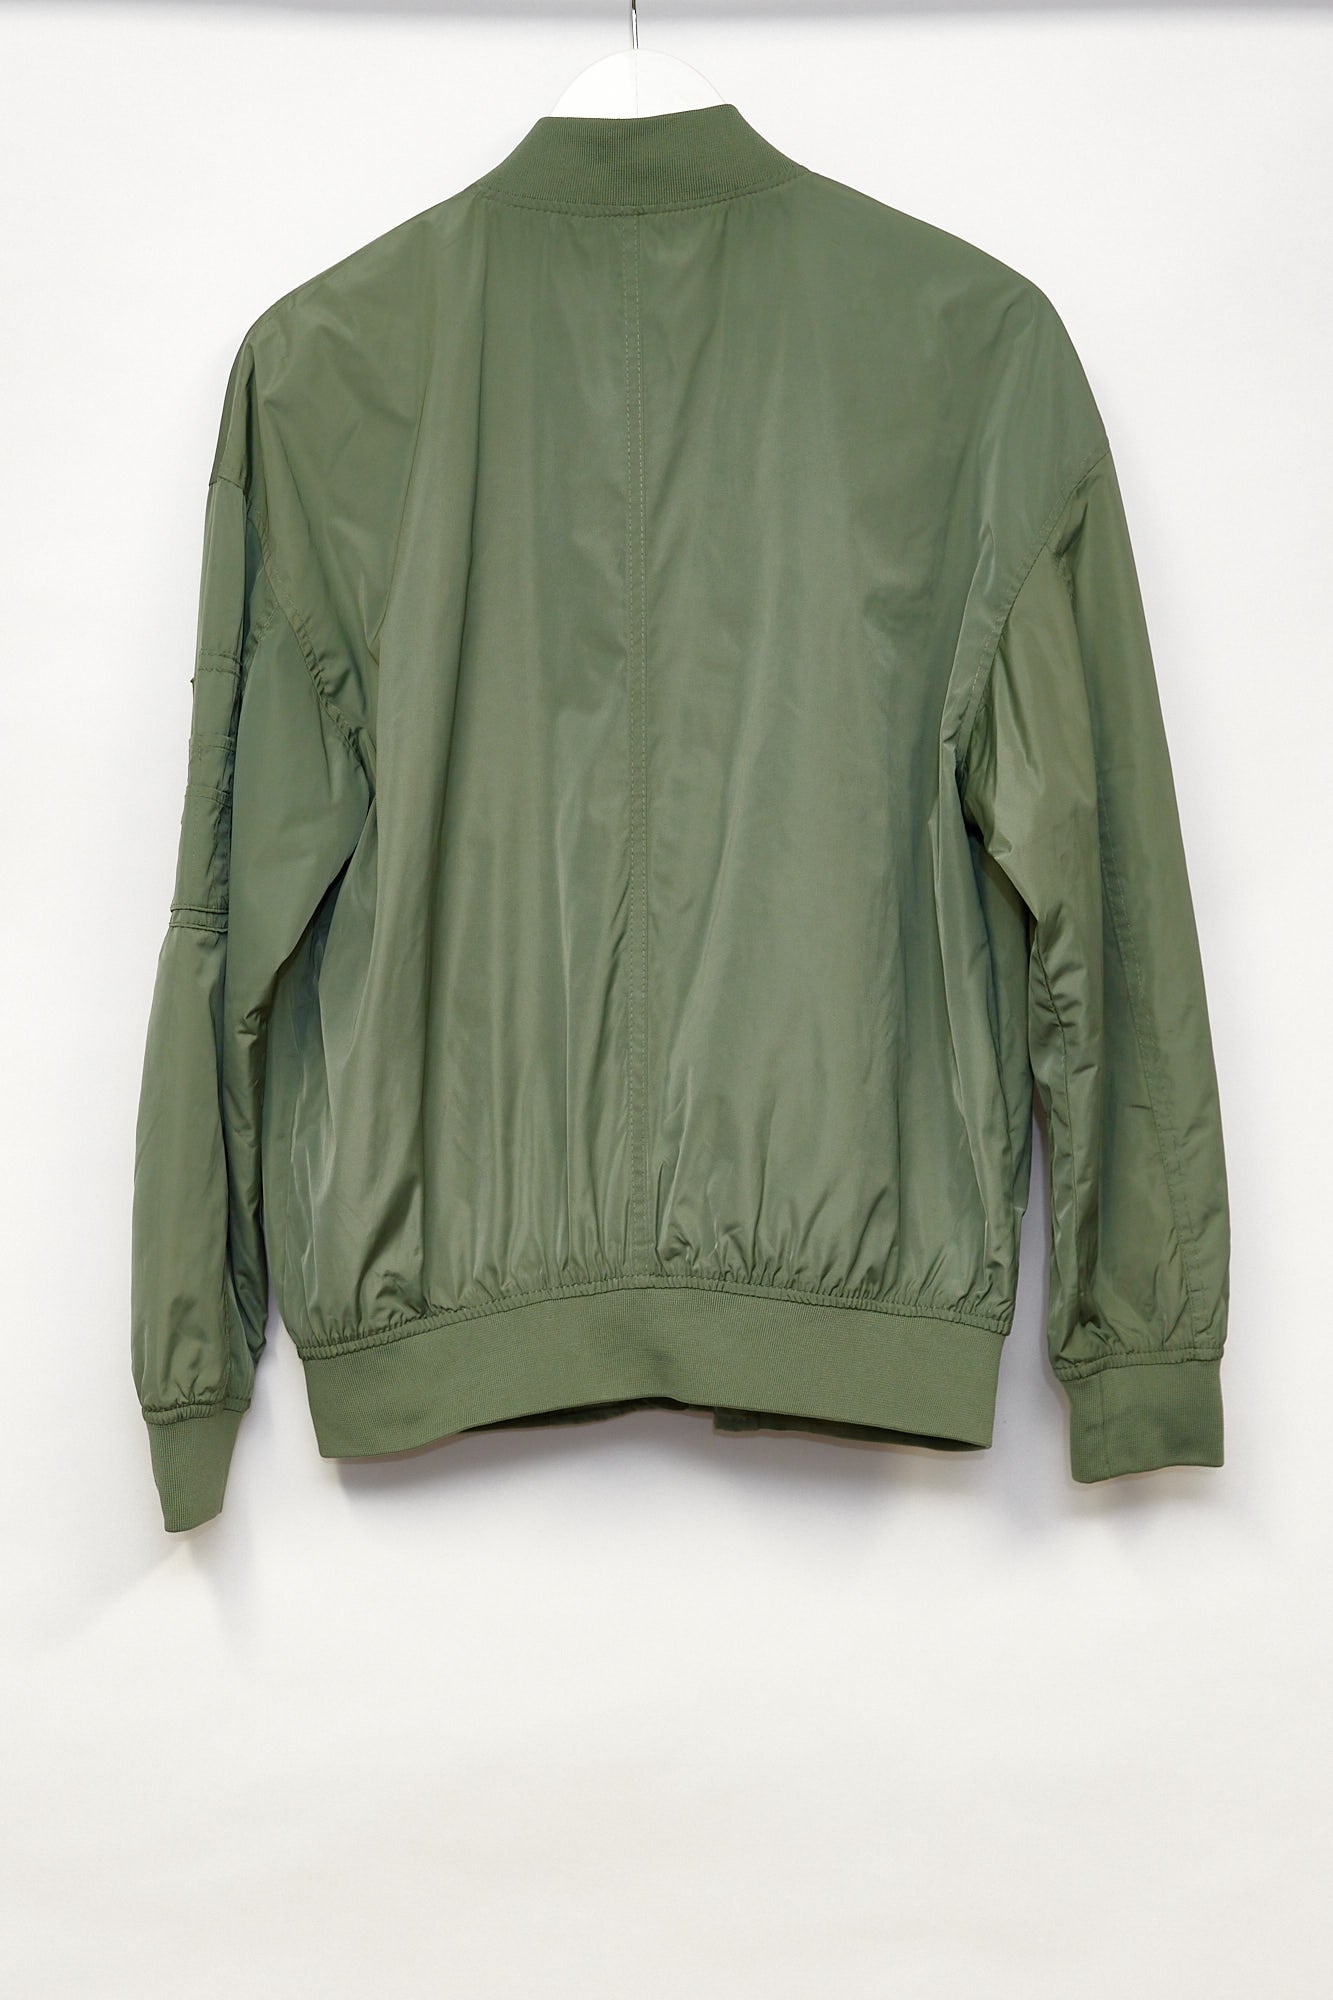 Mens Bershka green bomber jacket size small